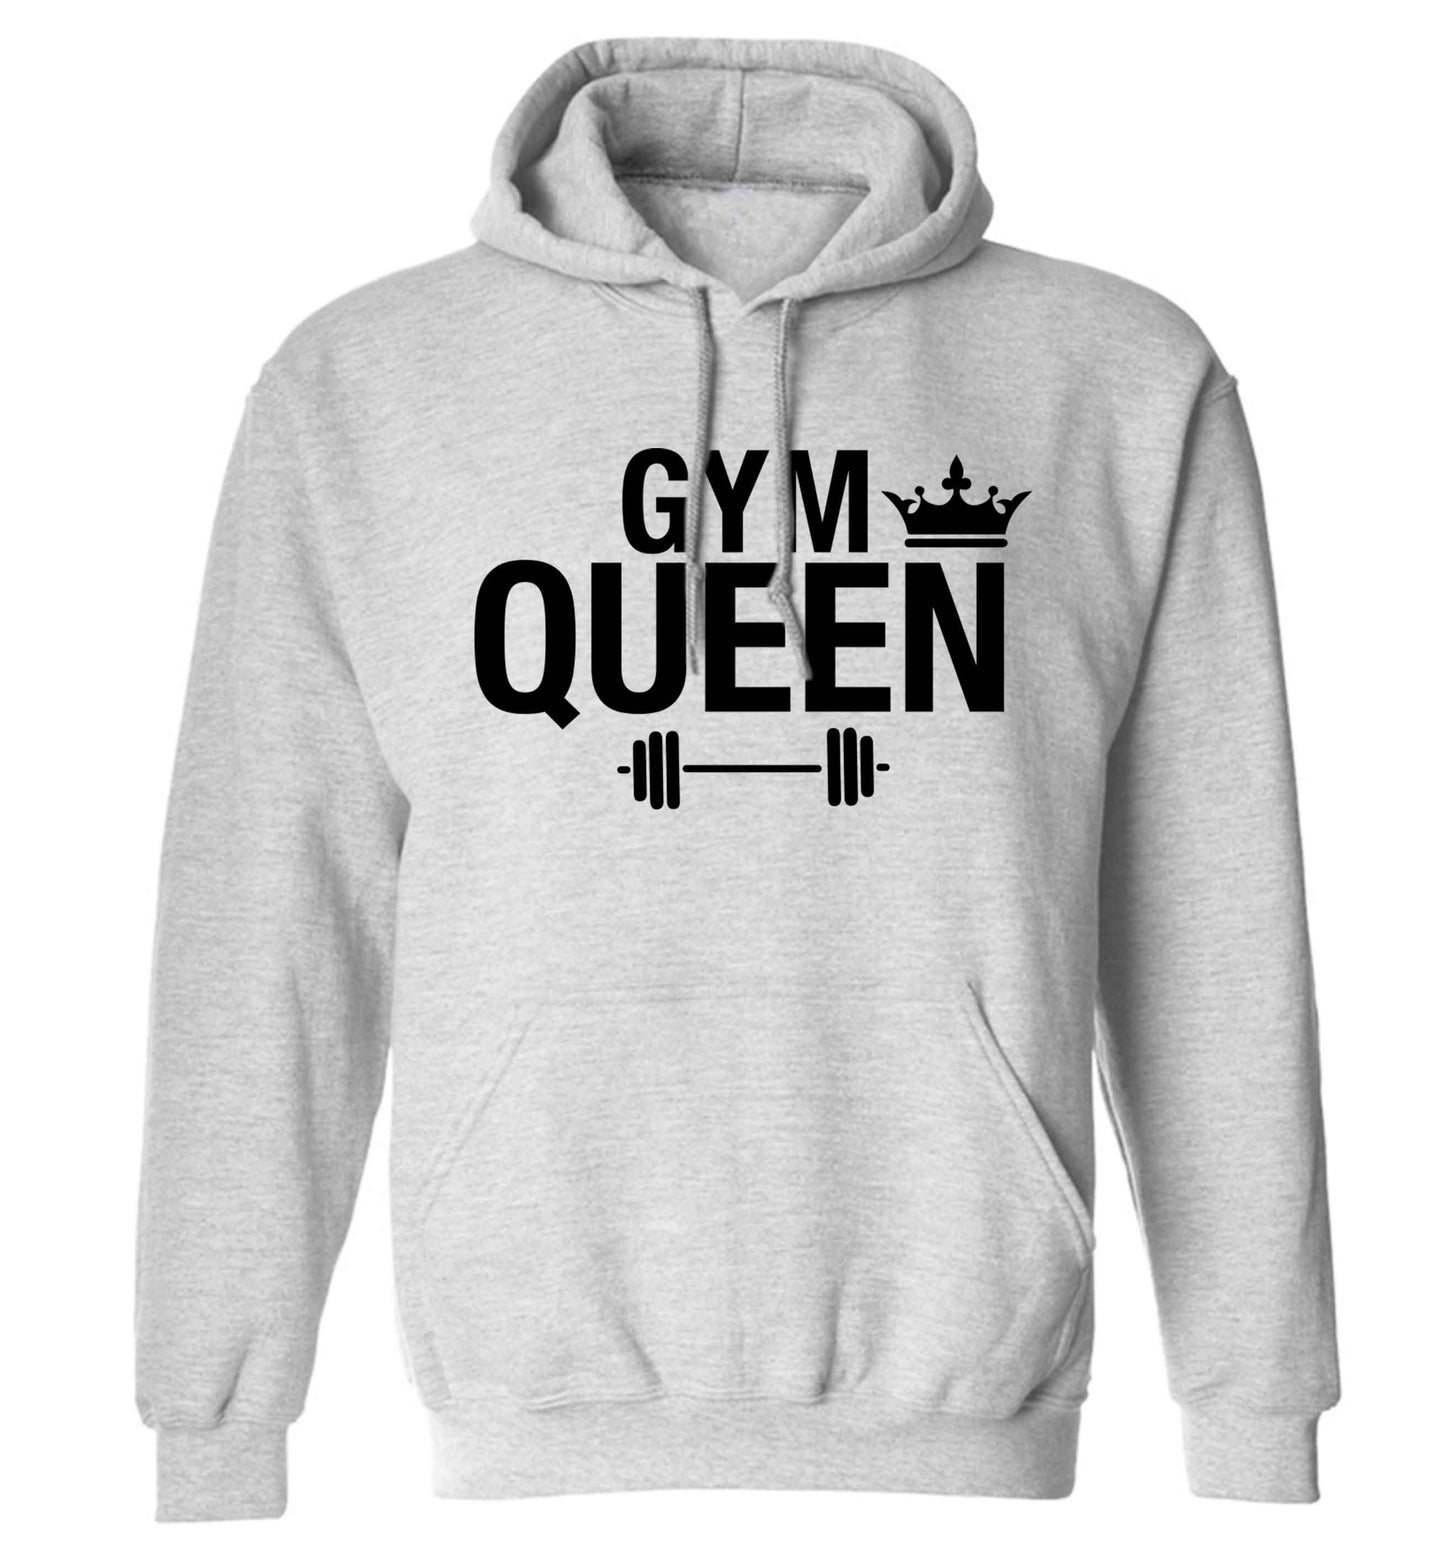 Gym queen adults unisex grey hoodie 2XL